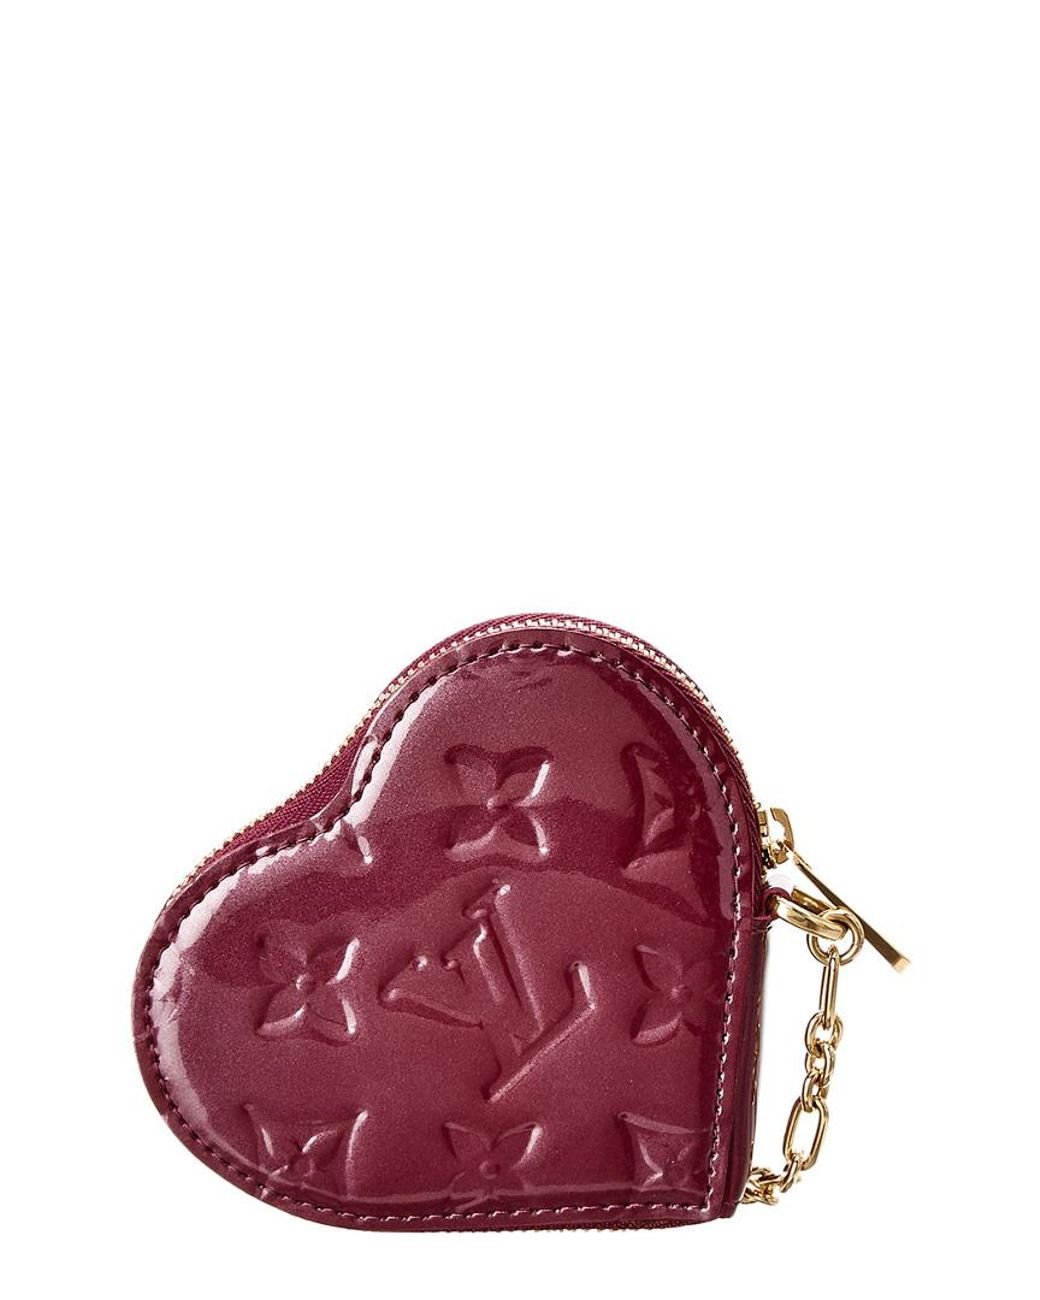 Louis Vuitton Limited Edition Purple Monogram Vernis Leather Heart Coin  Purse